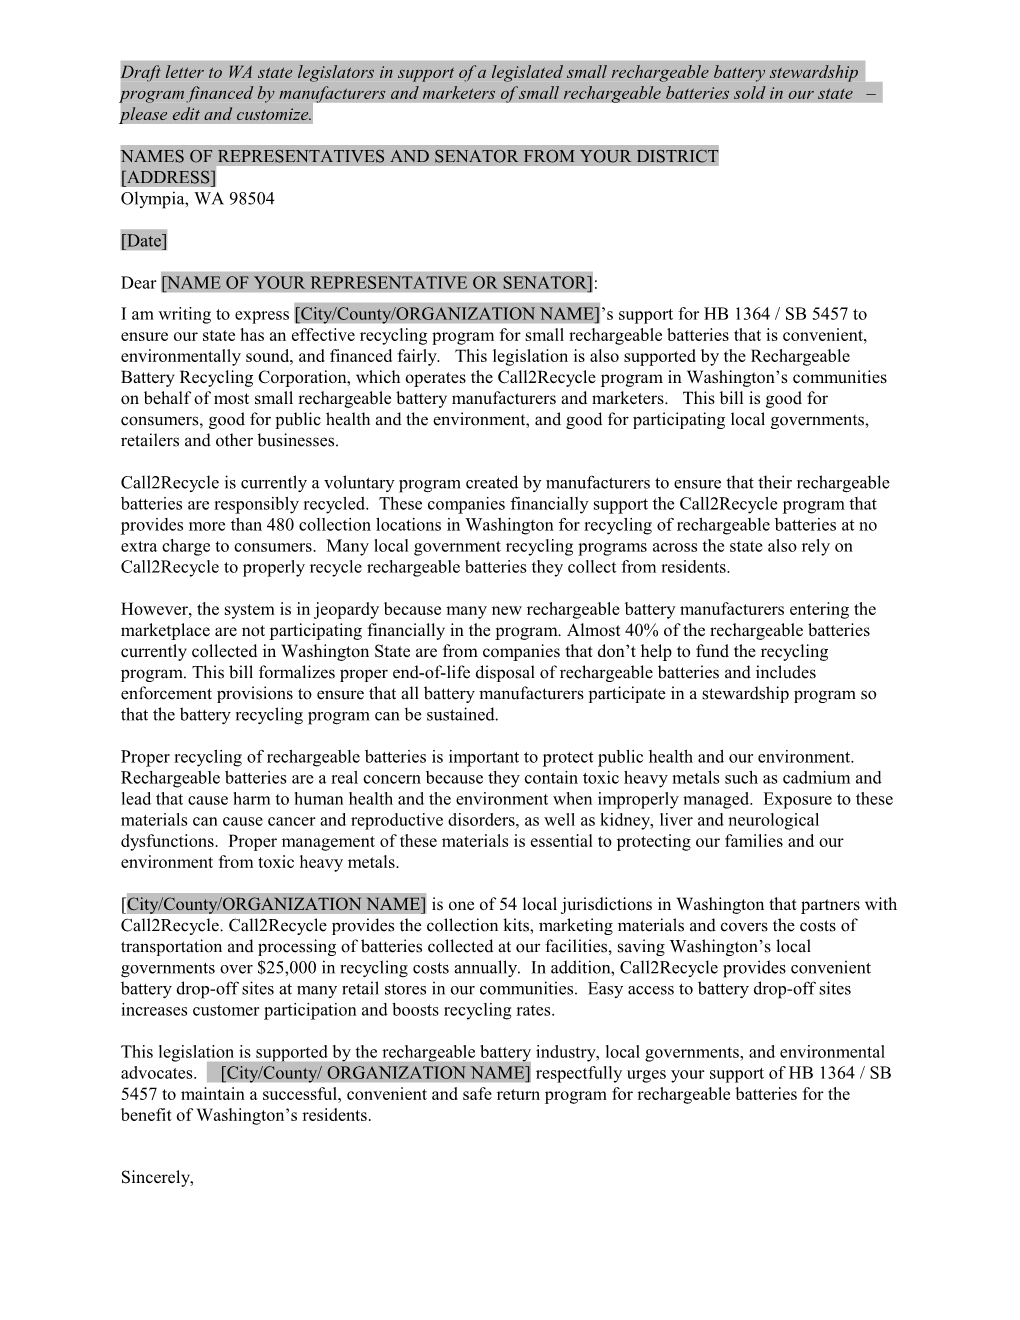 Sample Letter of Support for Rechargeable Battery Legislation in Washington